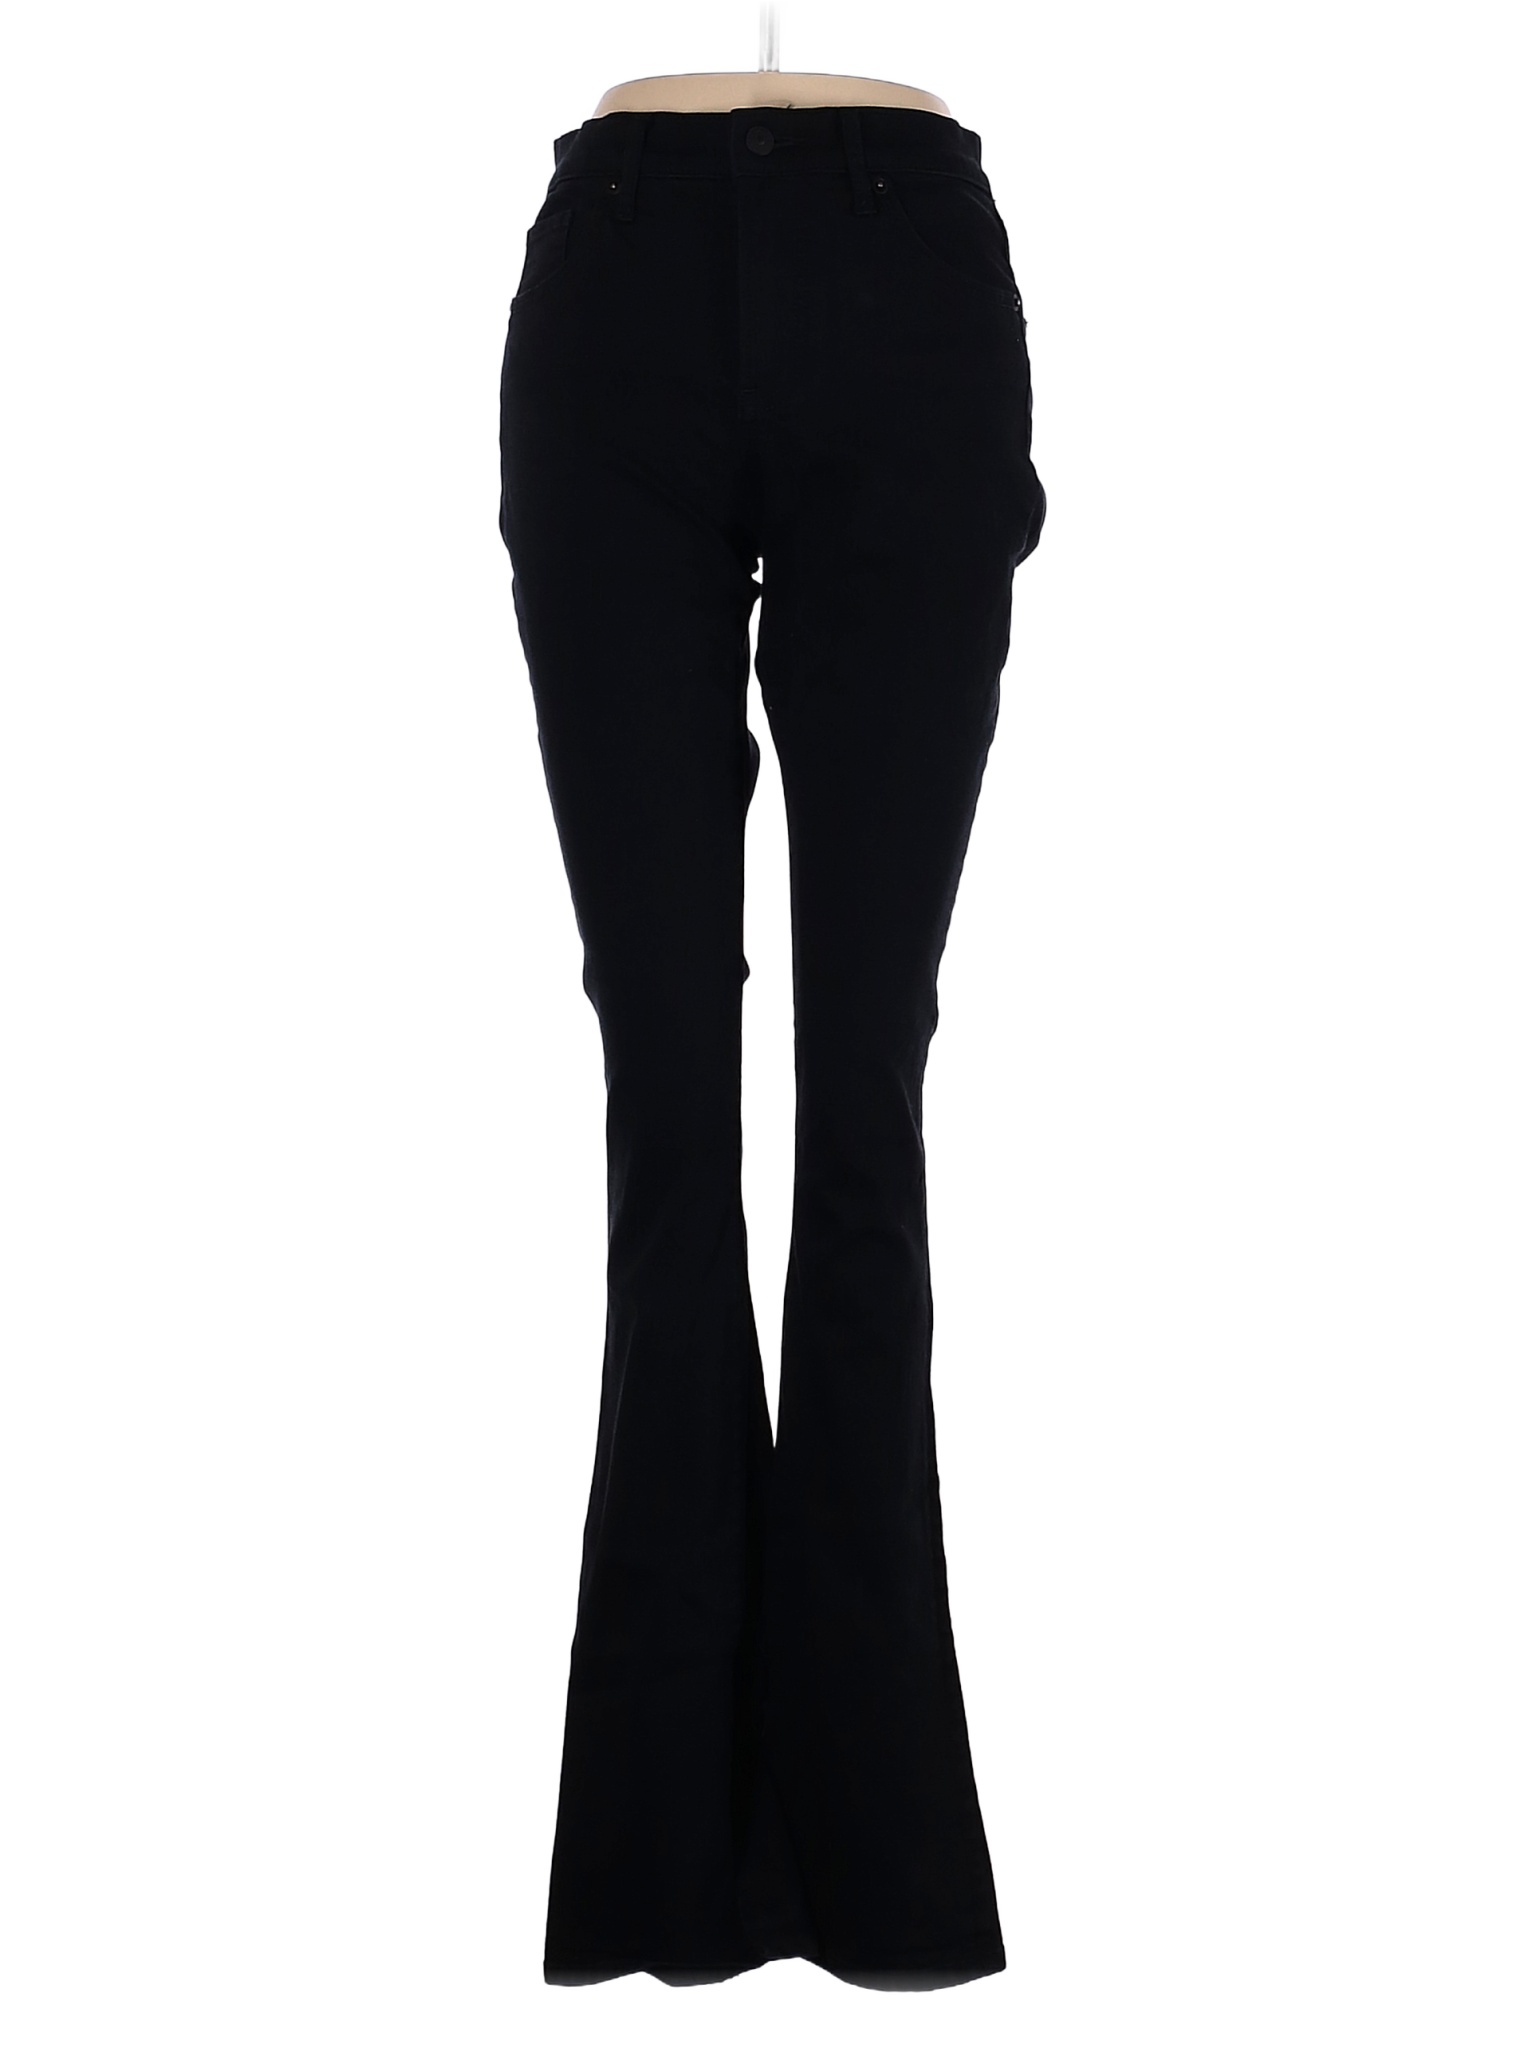 Express Solid Black Jeans Size 6 - 76% off | thredUP